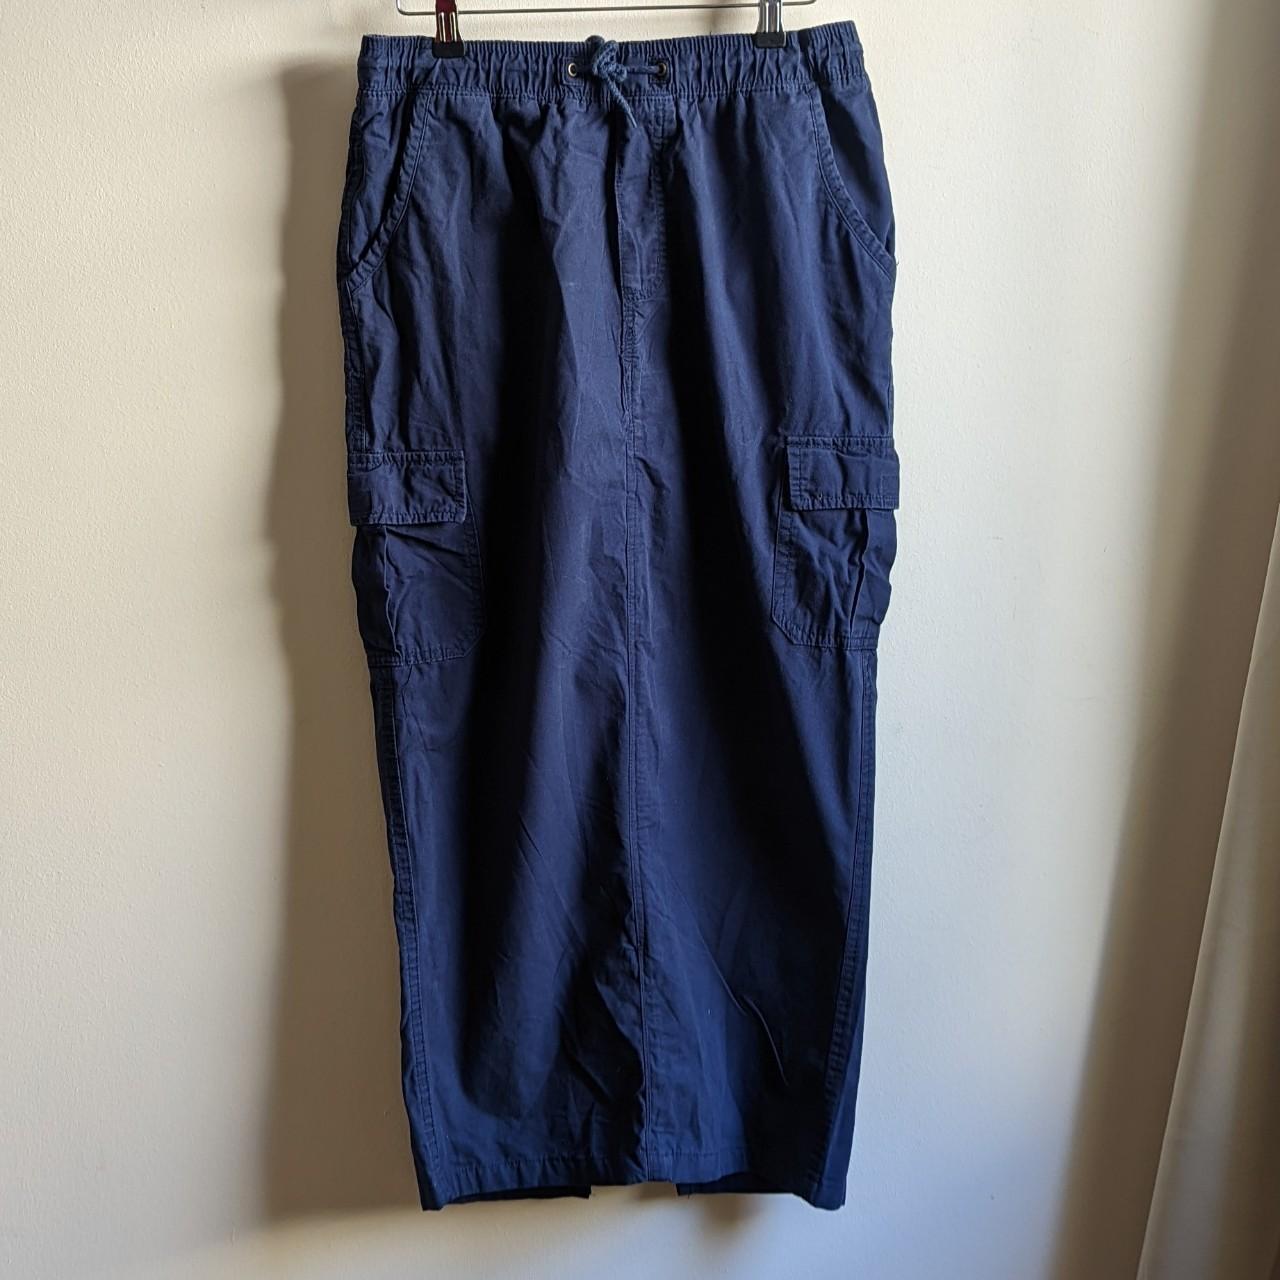 Reworked navy blue vintage cargo maxi skirt. Made... - Depop